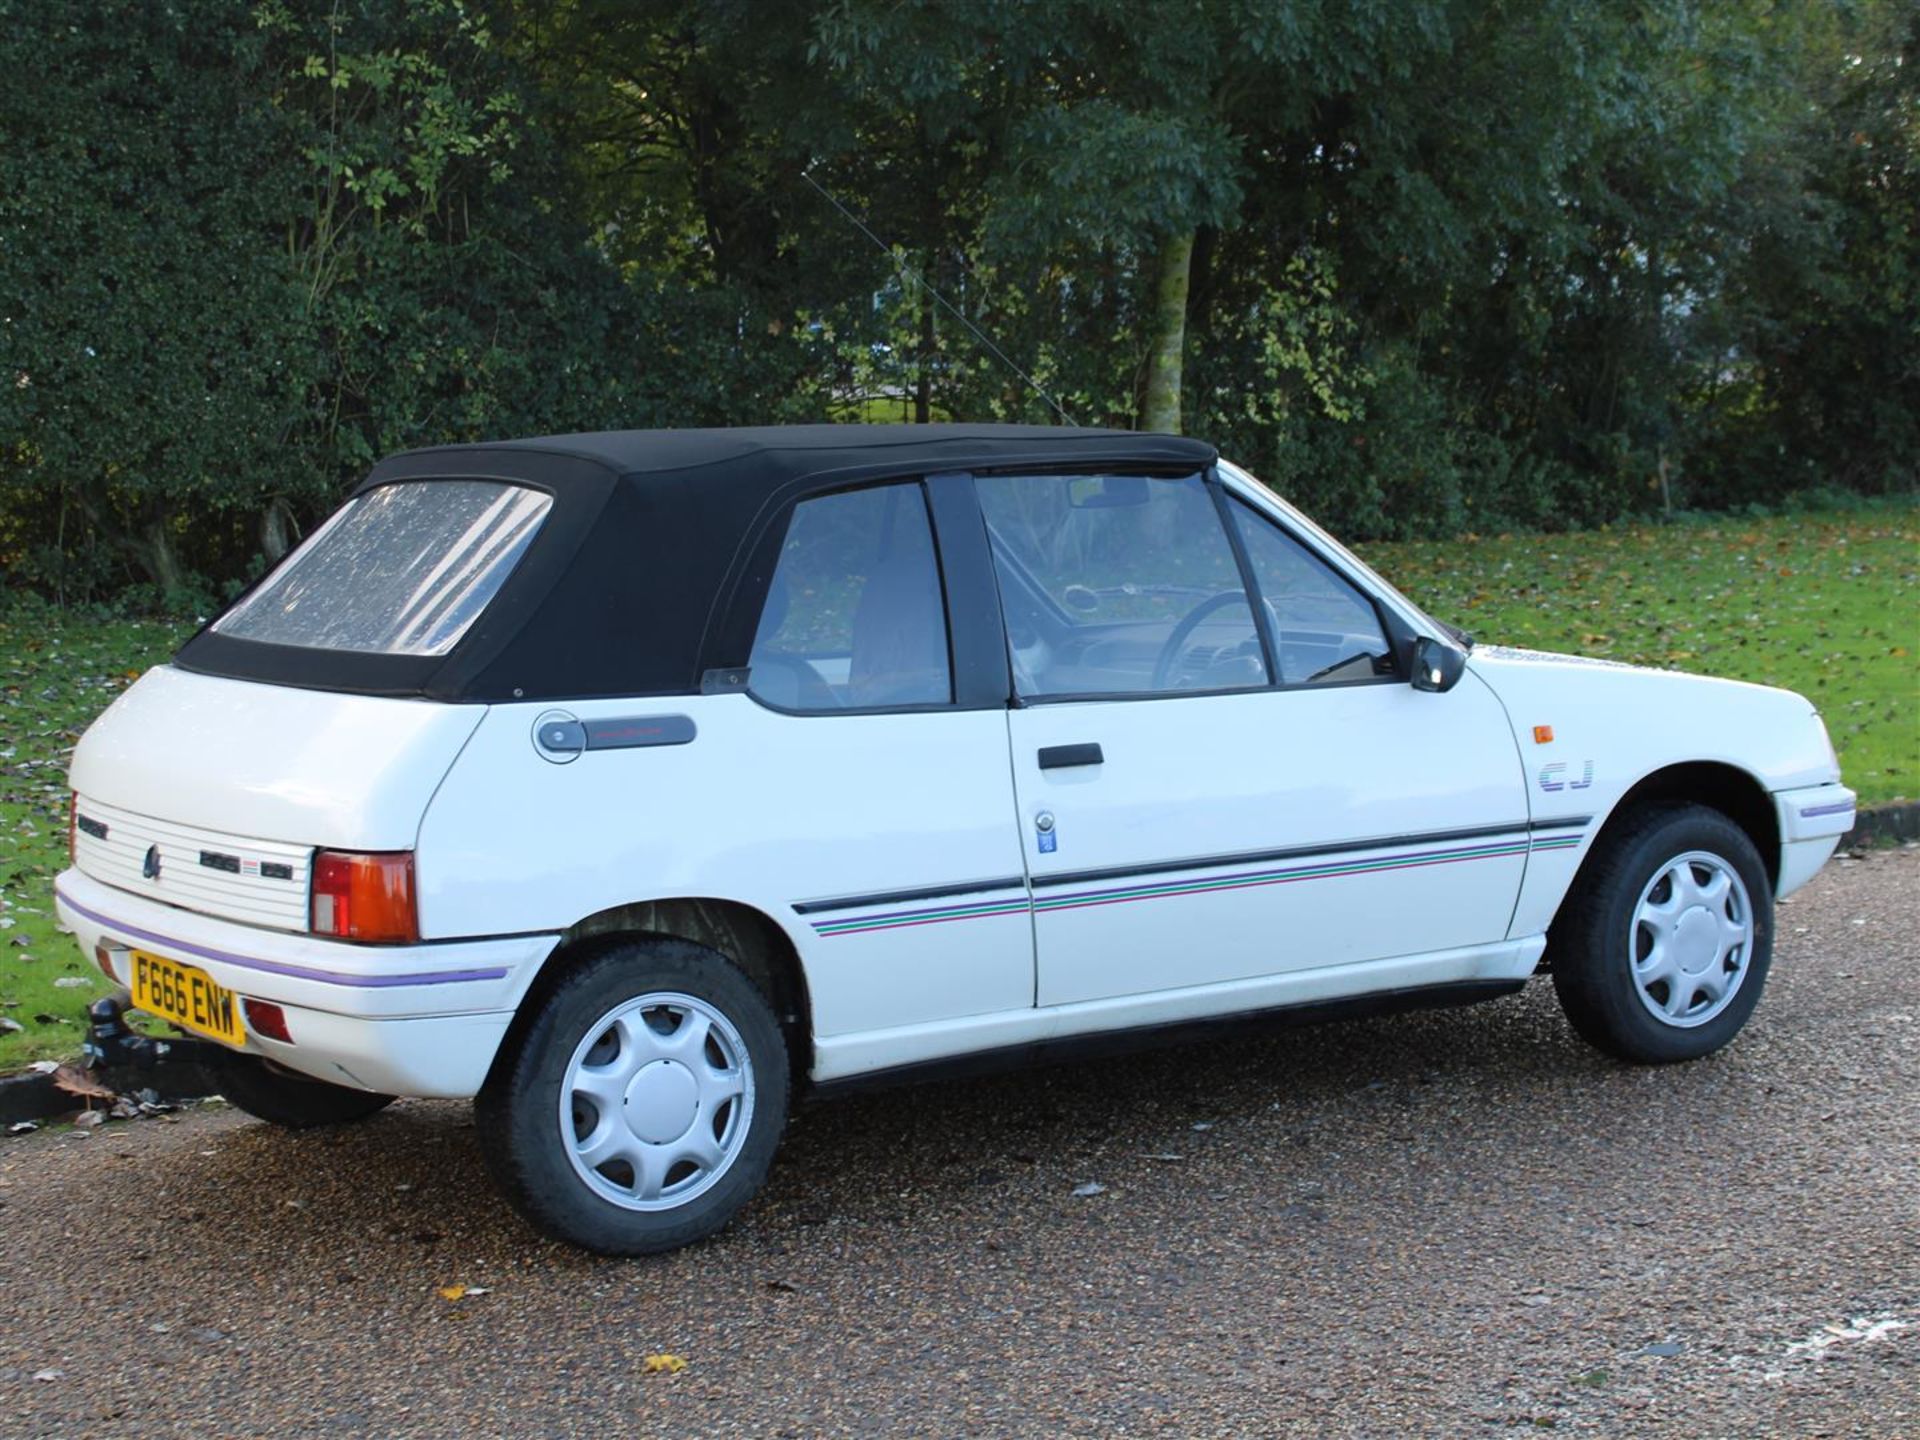 1989 Peugeot 205 1.4 CJ Junior - Image 4 of 29